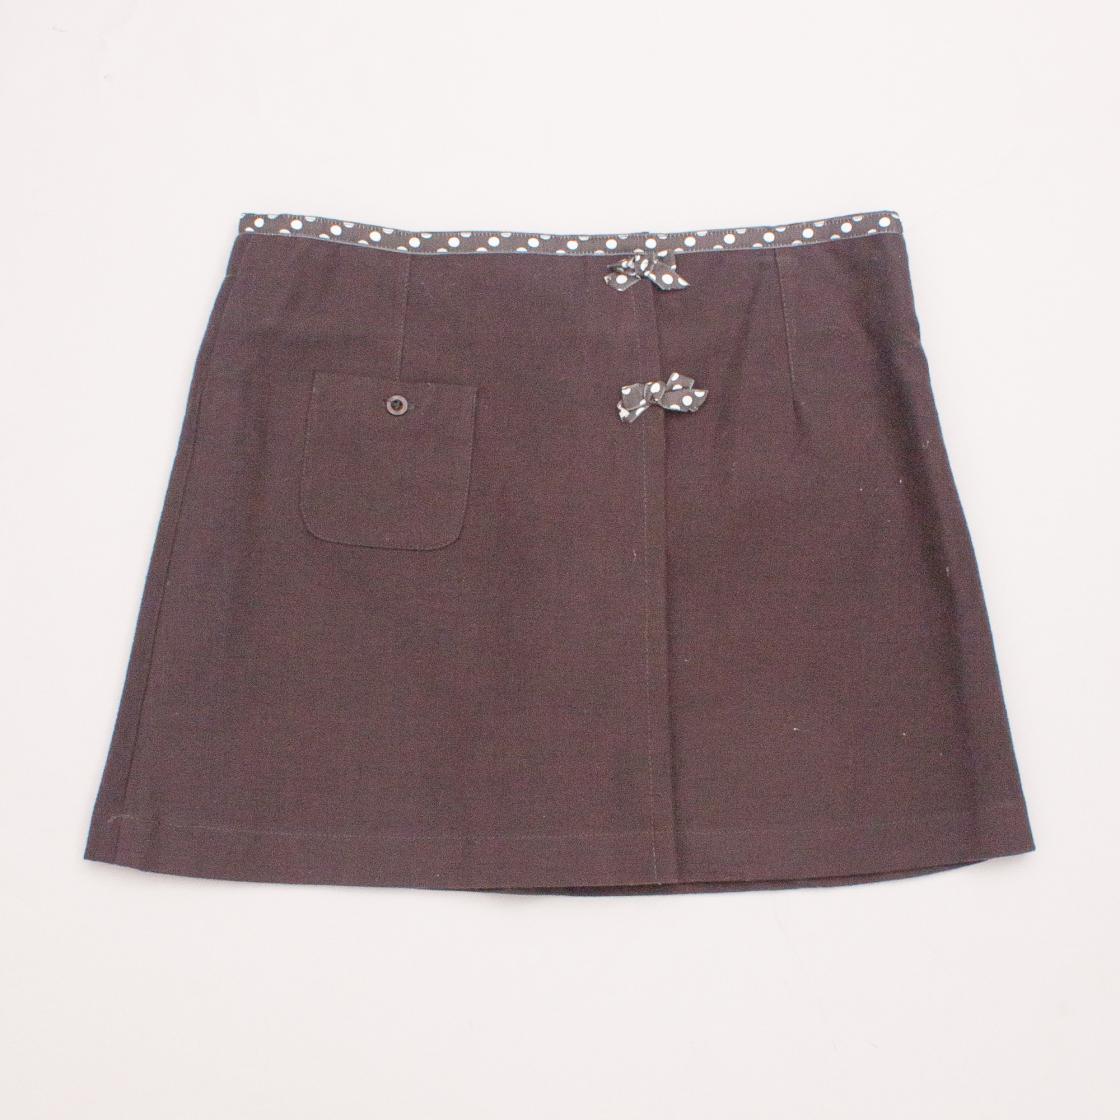 Gumboots Charcoal Skirt